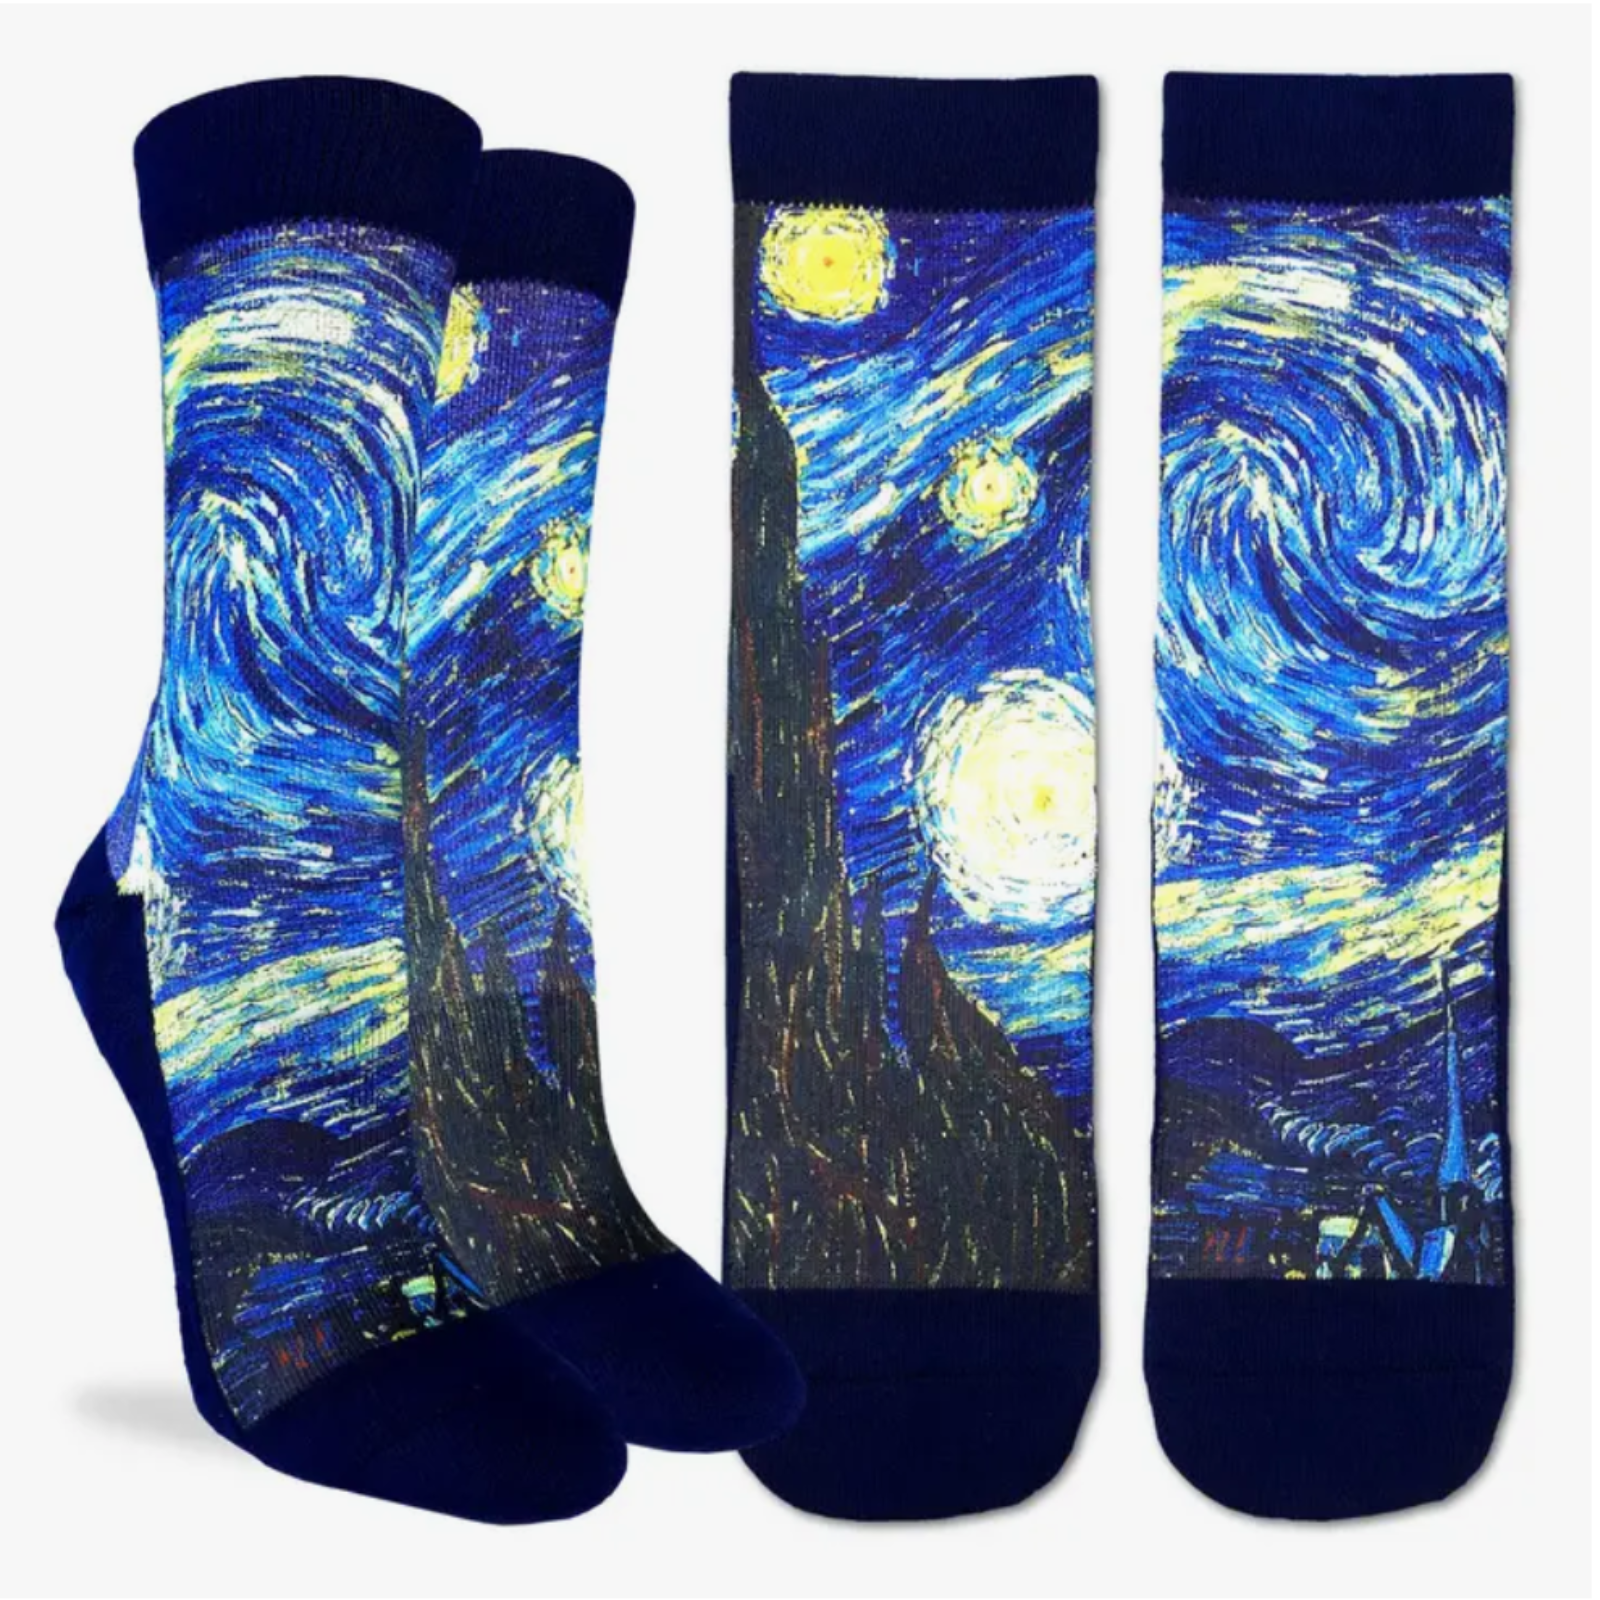 Good Luck Sock featuring Van Gogh's Starry Night women's sock